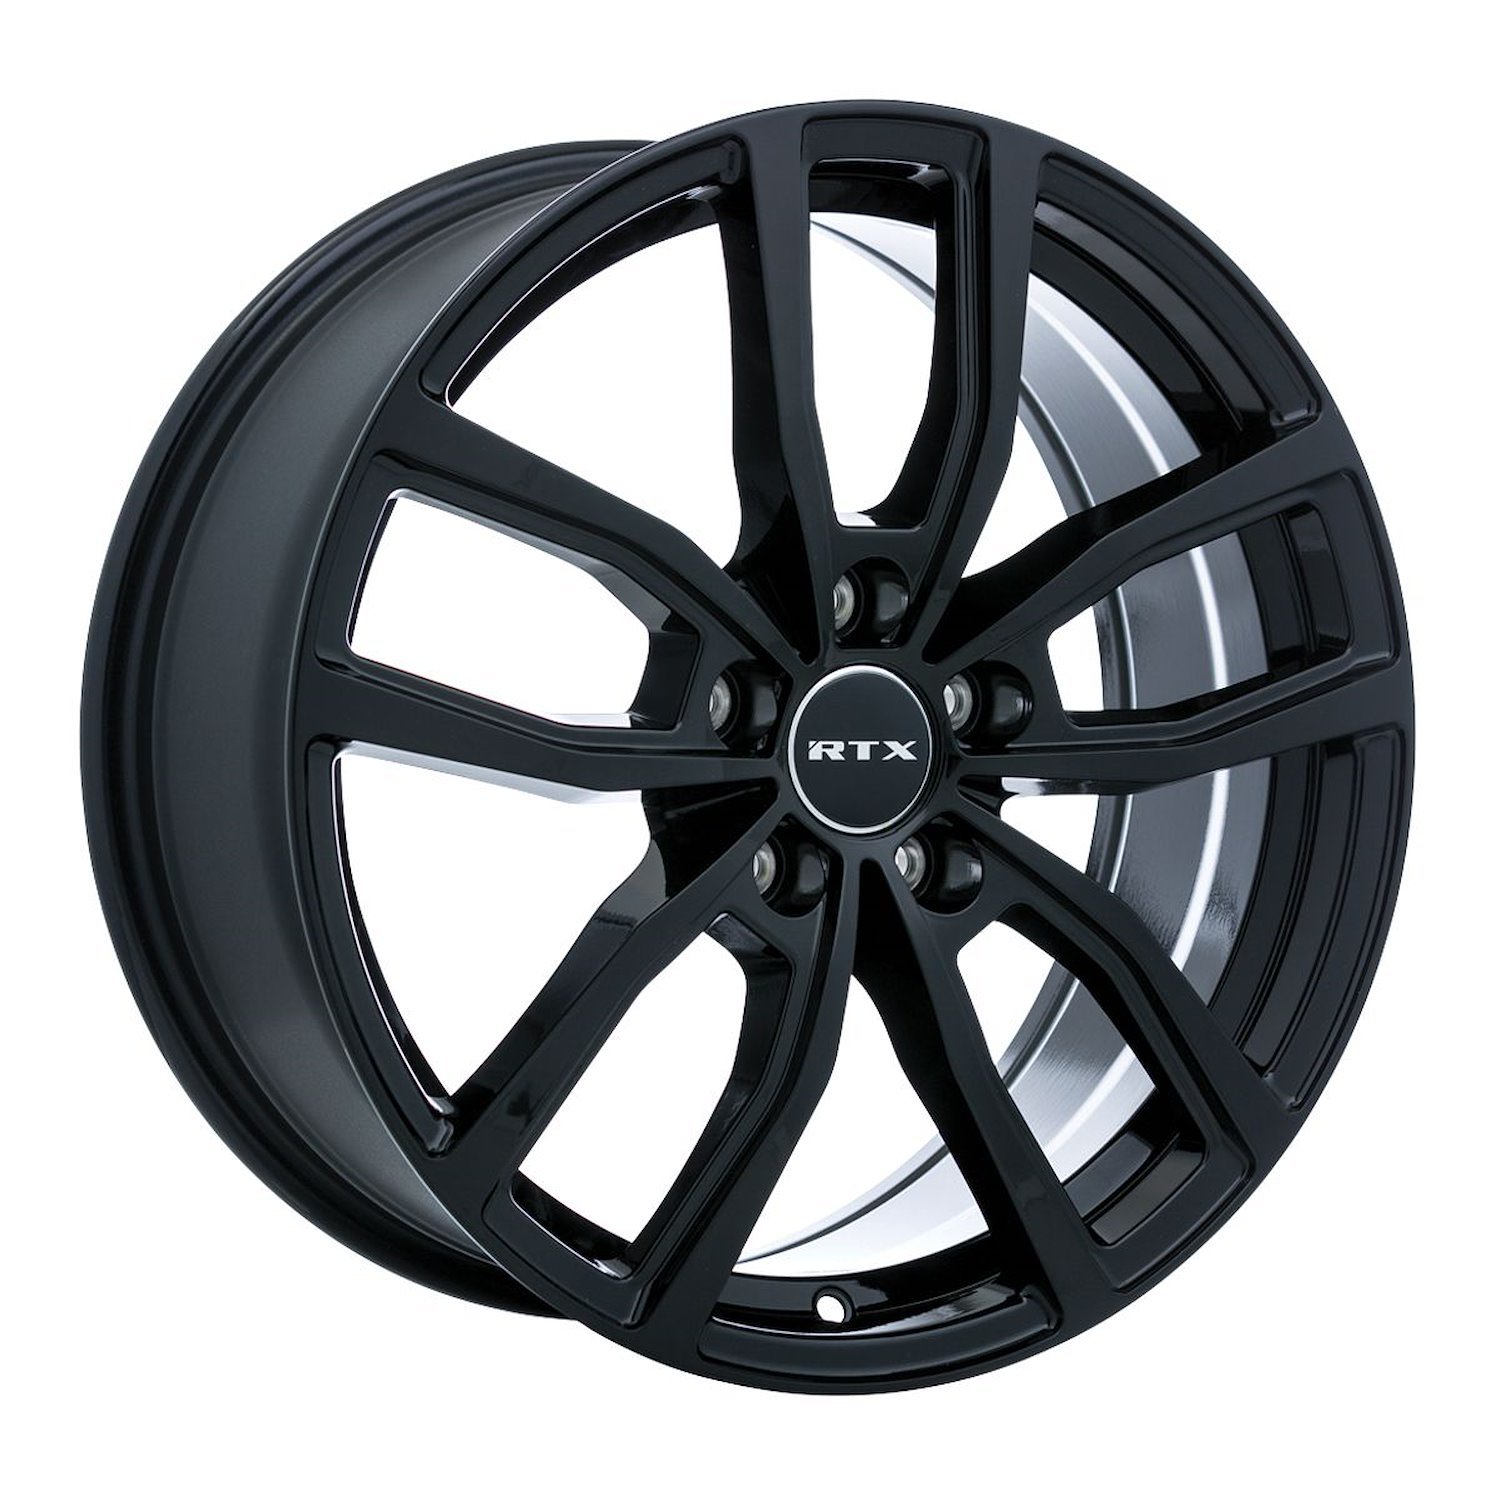 163706 RTX-Series Solstice Wheel [Size: 18" x 7.50"] Gloss Black Finish